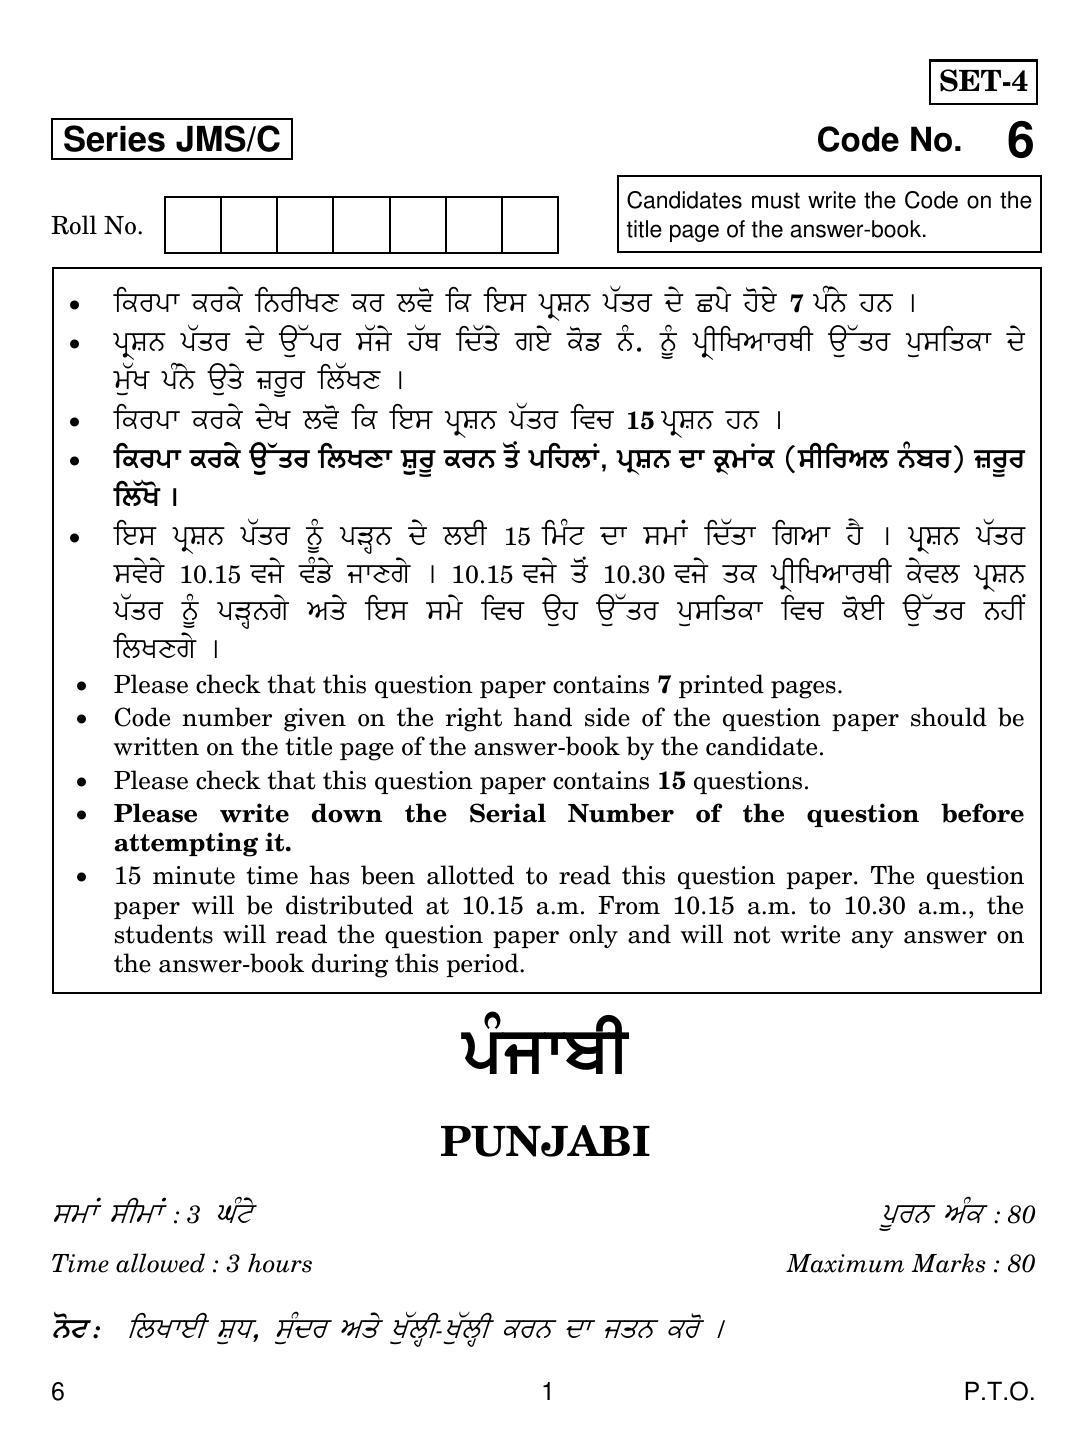 CBSE Class 10 6 Punjabi 2019 Compartment Question Paper - Page 1